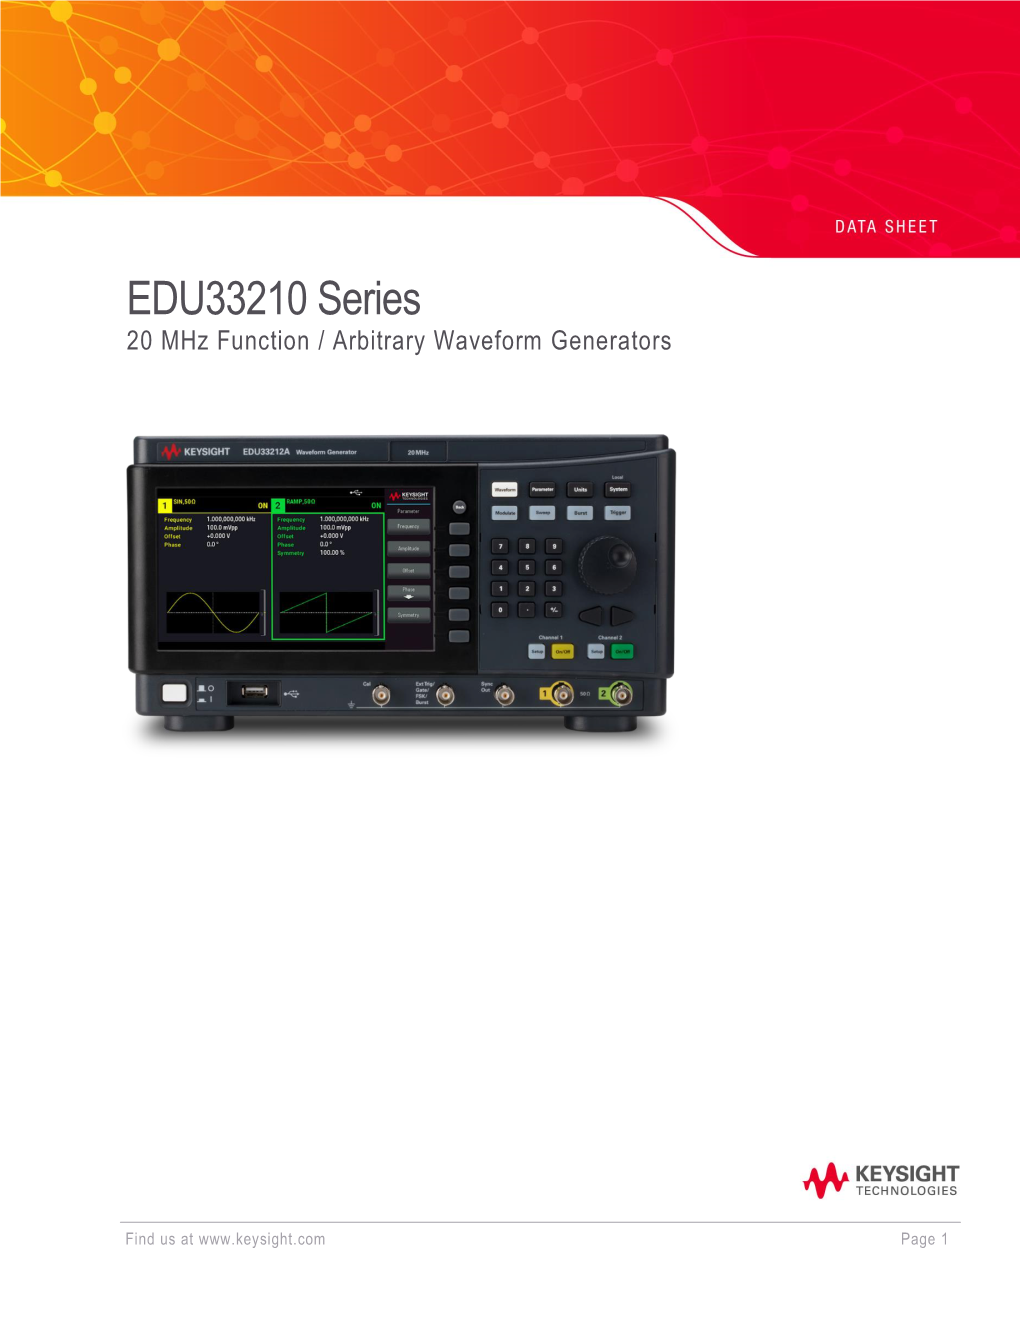 EDU33210 Series 20 Mhz Function/Arbitrary Waveform